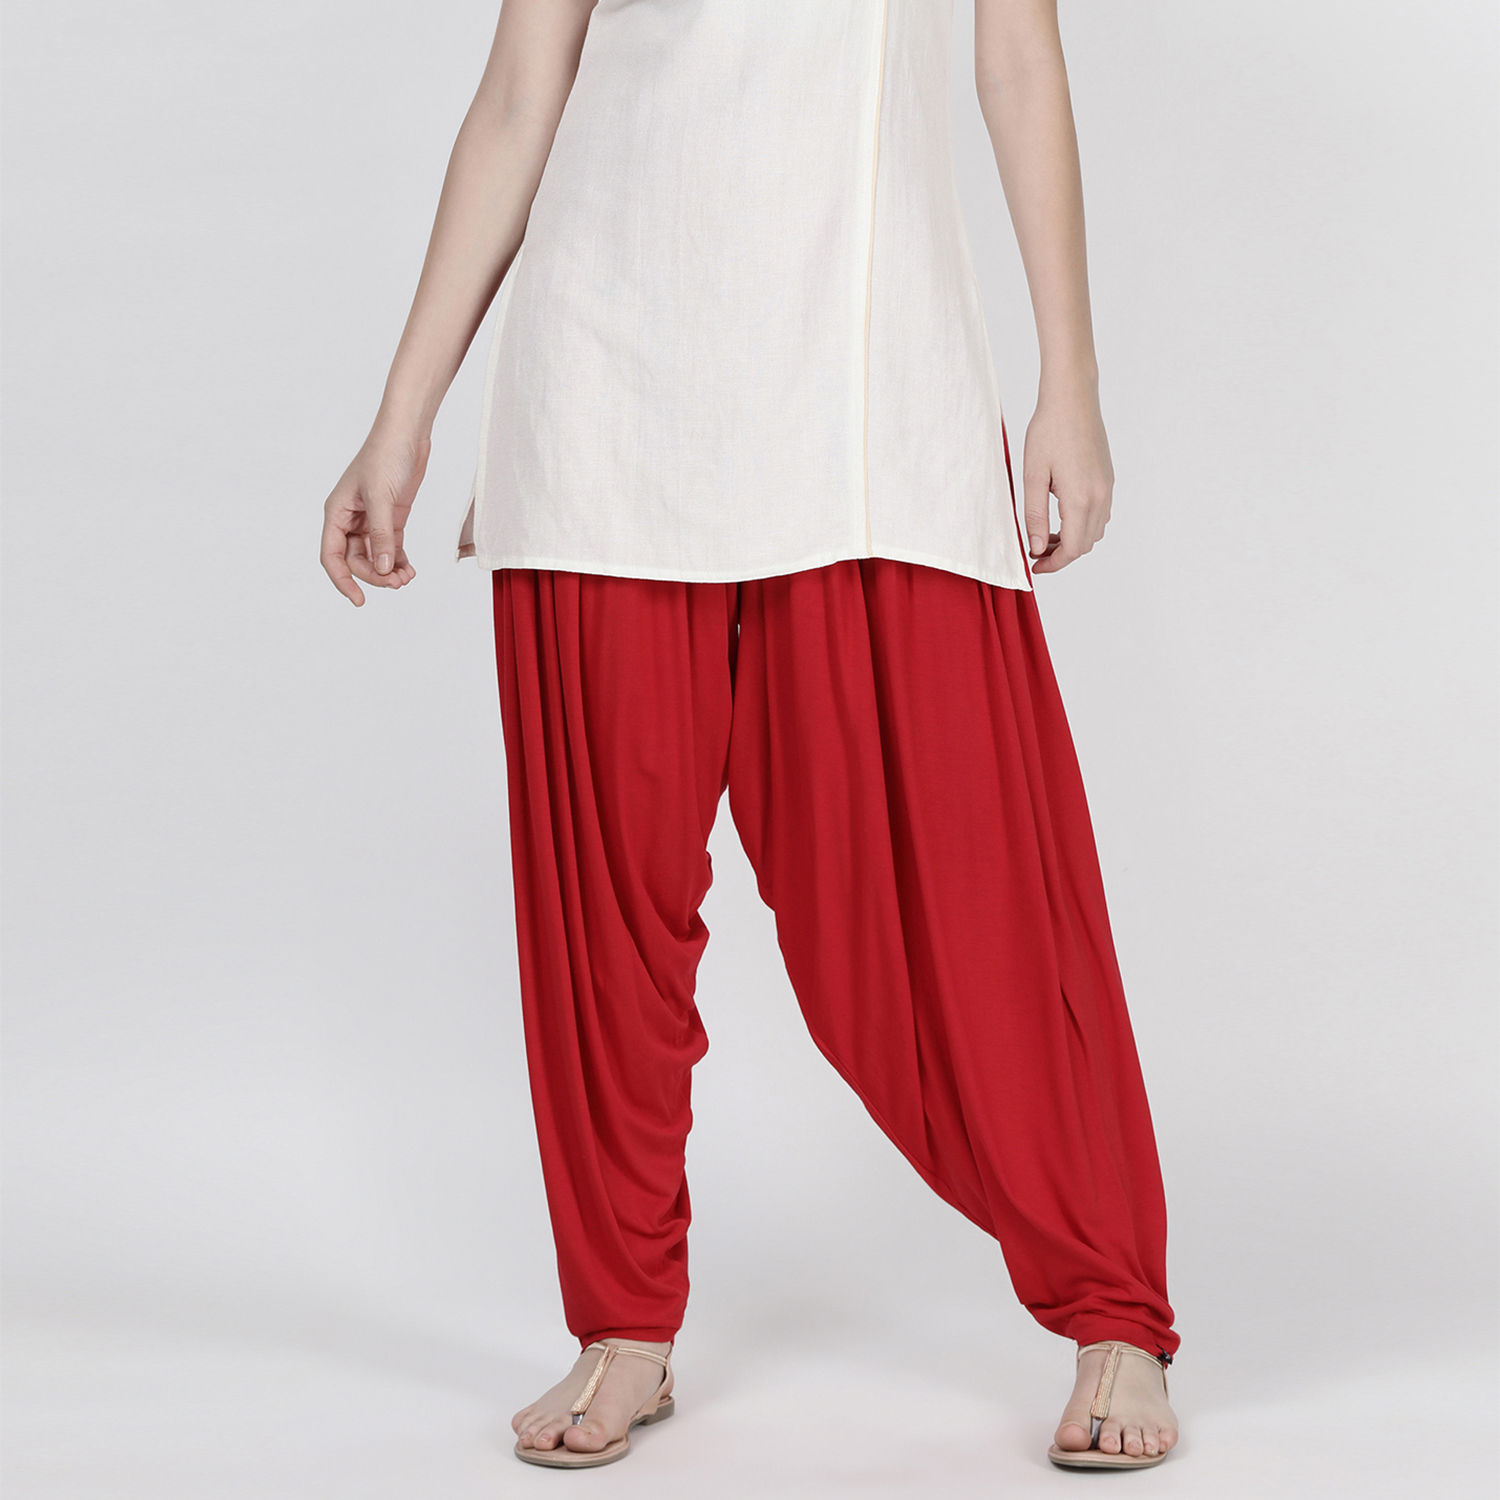 Red Patiala Pants - Buy Red Patiala Pants Online Starting at Just ₹169 |  Meesho